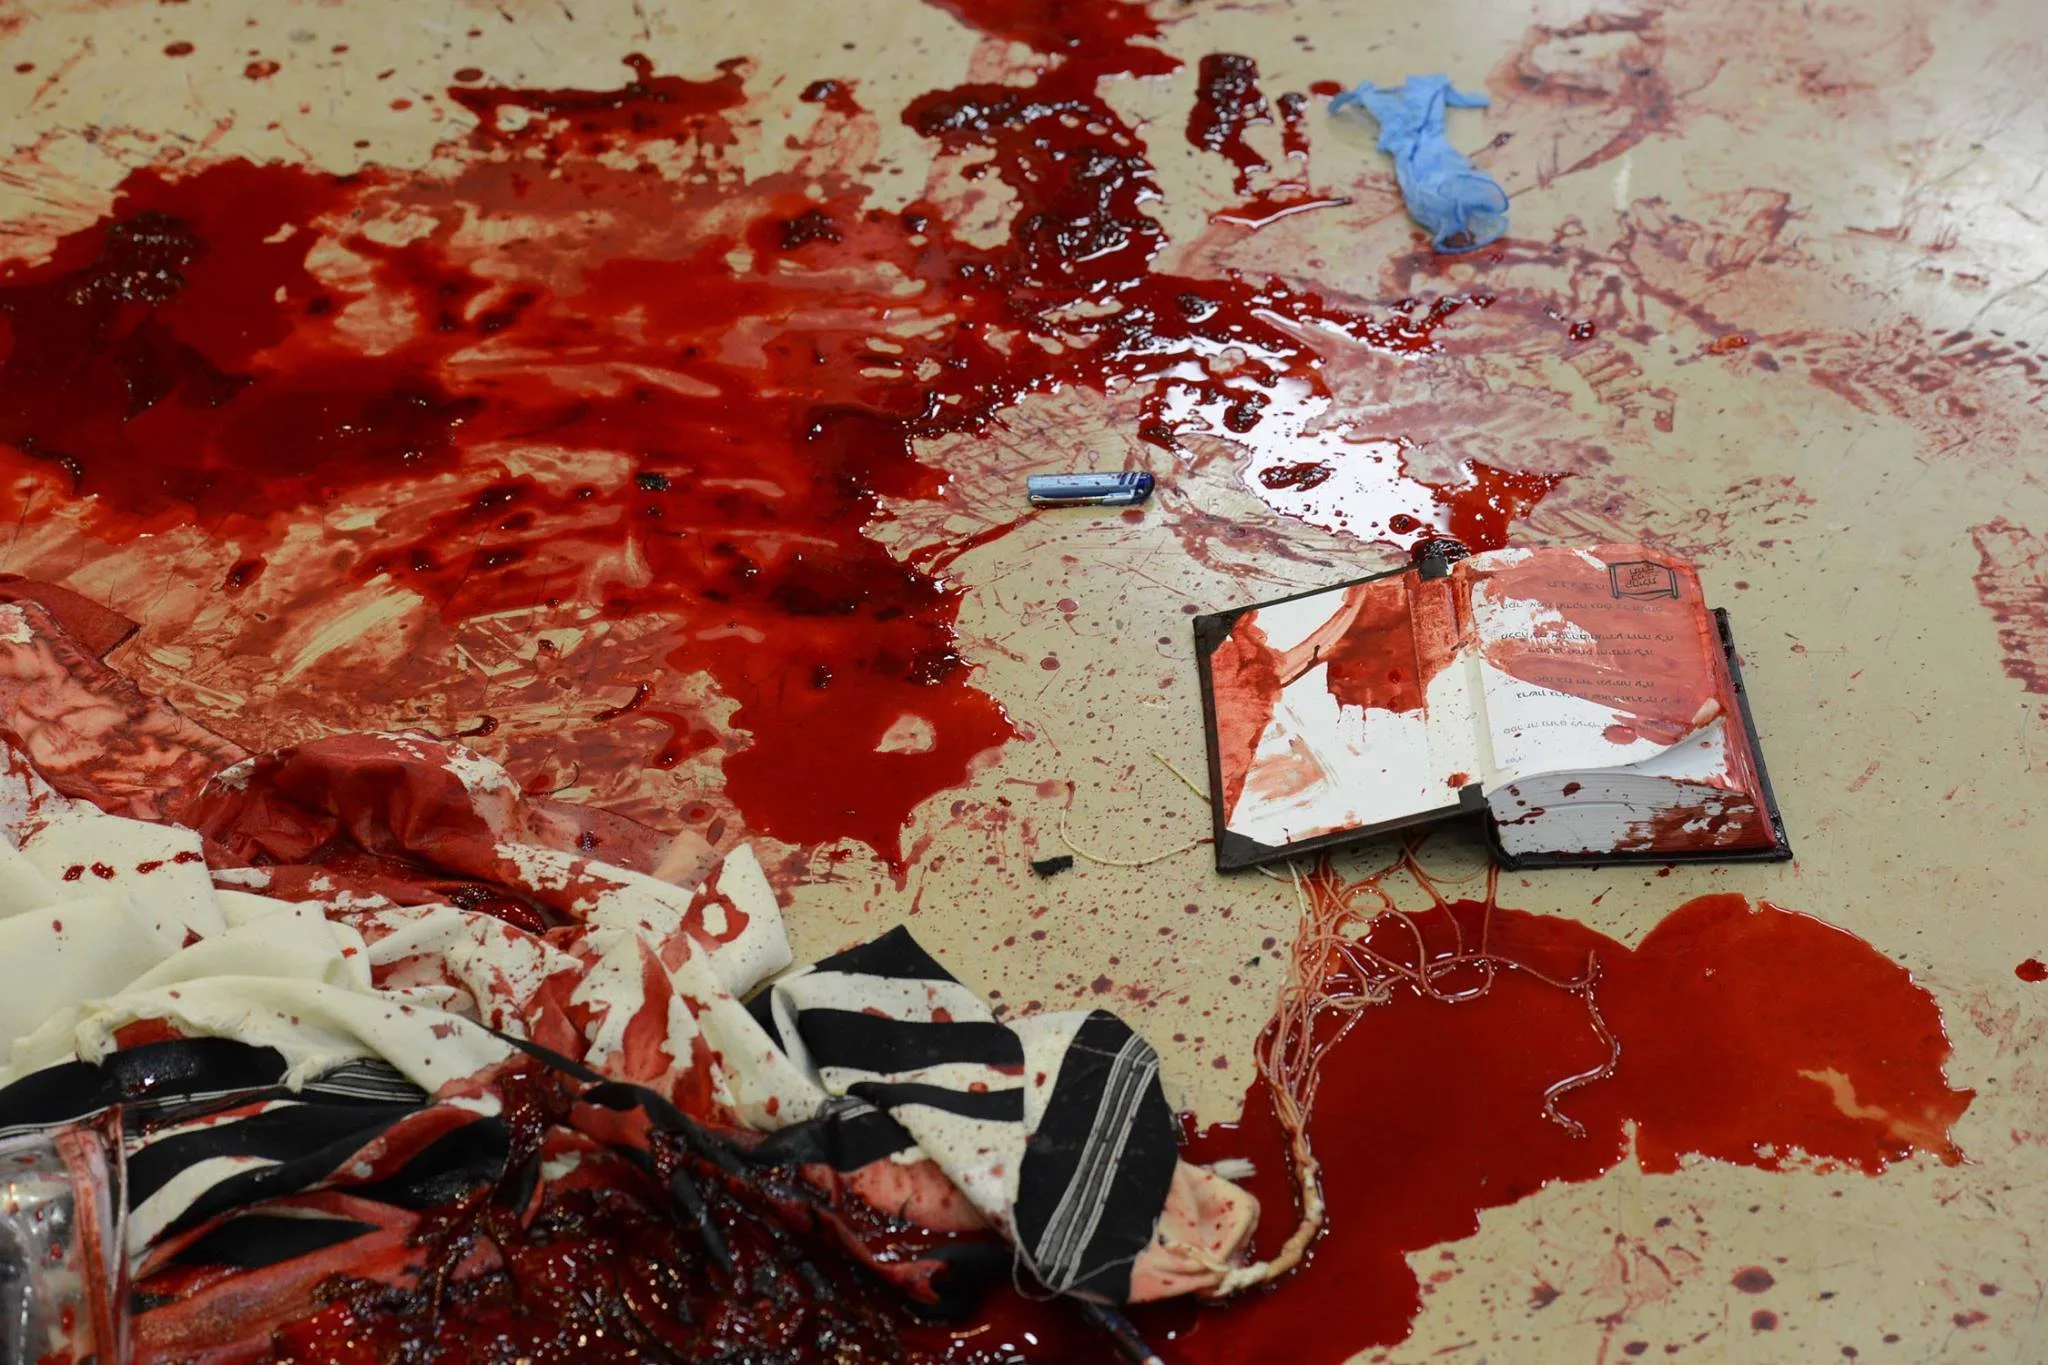 bloody-attack-on-jerusalem-synagogue-kills-four-during-morning-prayer-body-image-1416320286